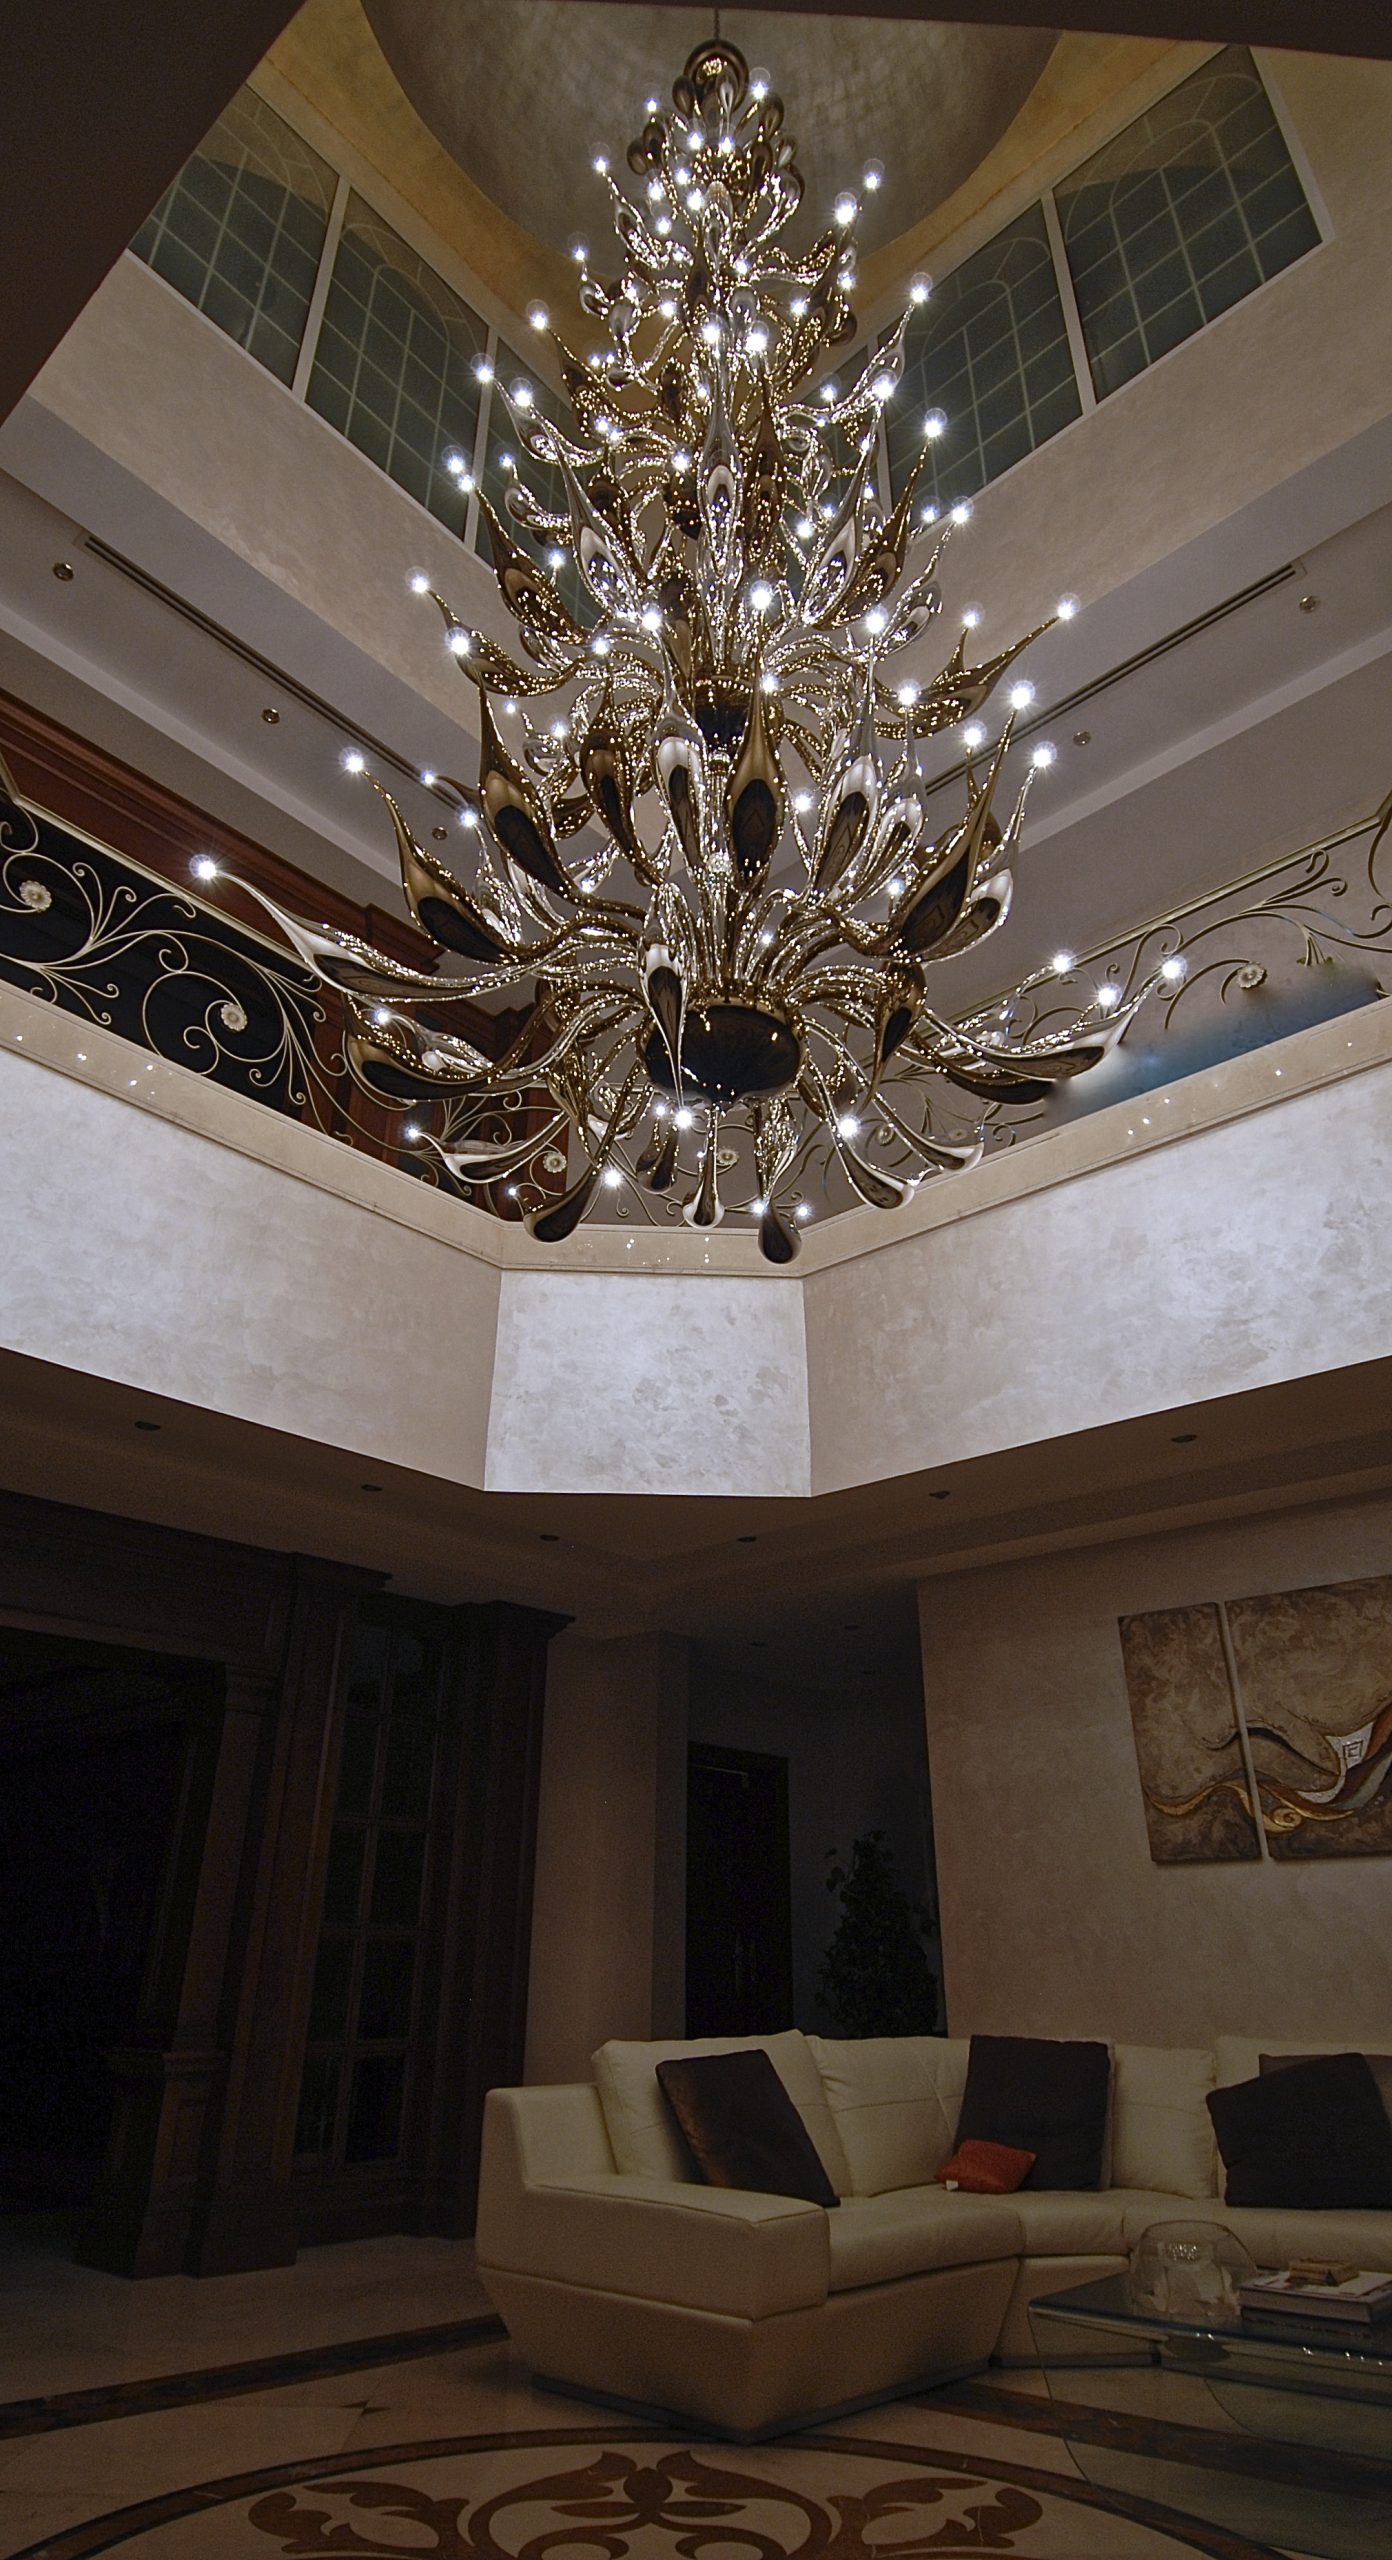 Big chandelier from below in Dubai